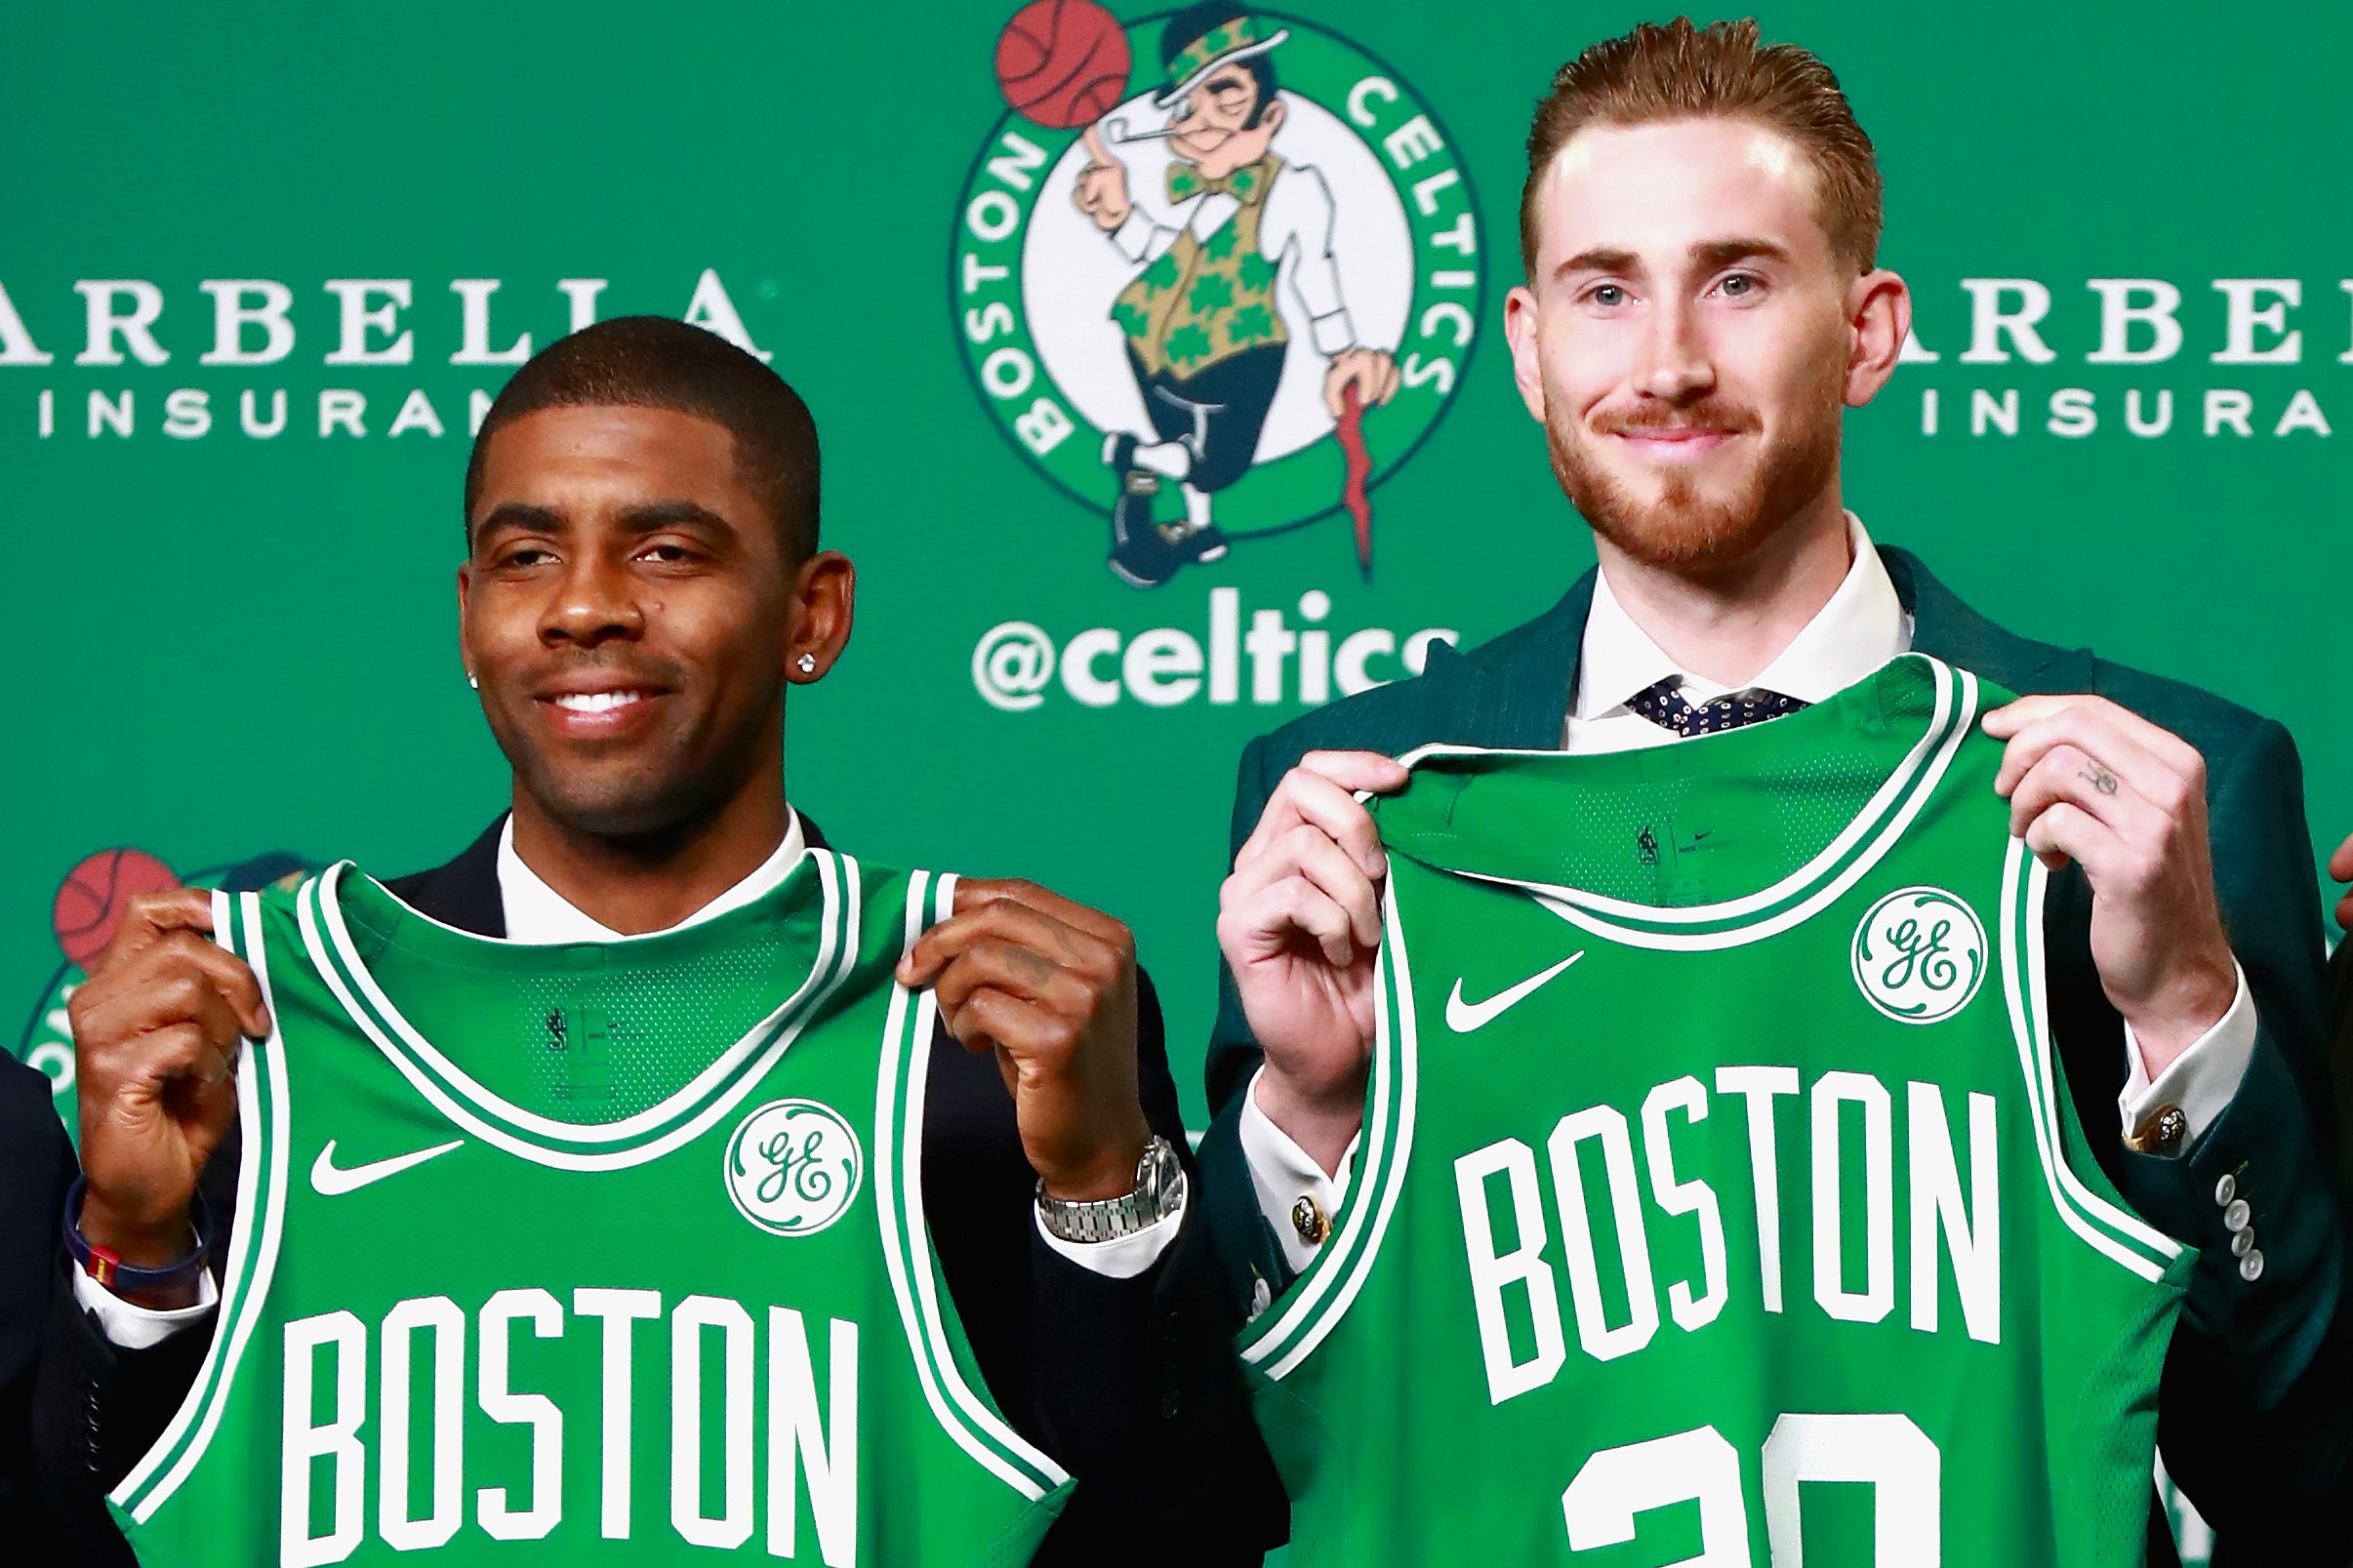 Celtics' Kyrie Irving talks relationship with LeBron, leaving Cavs